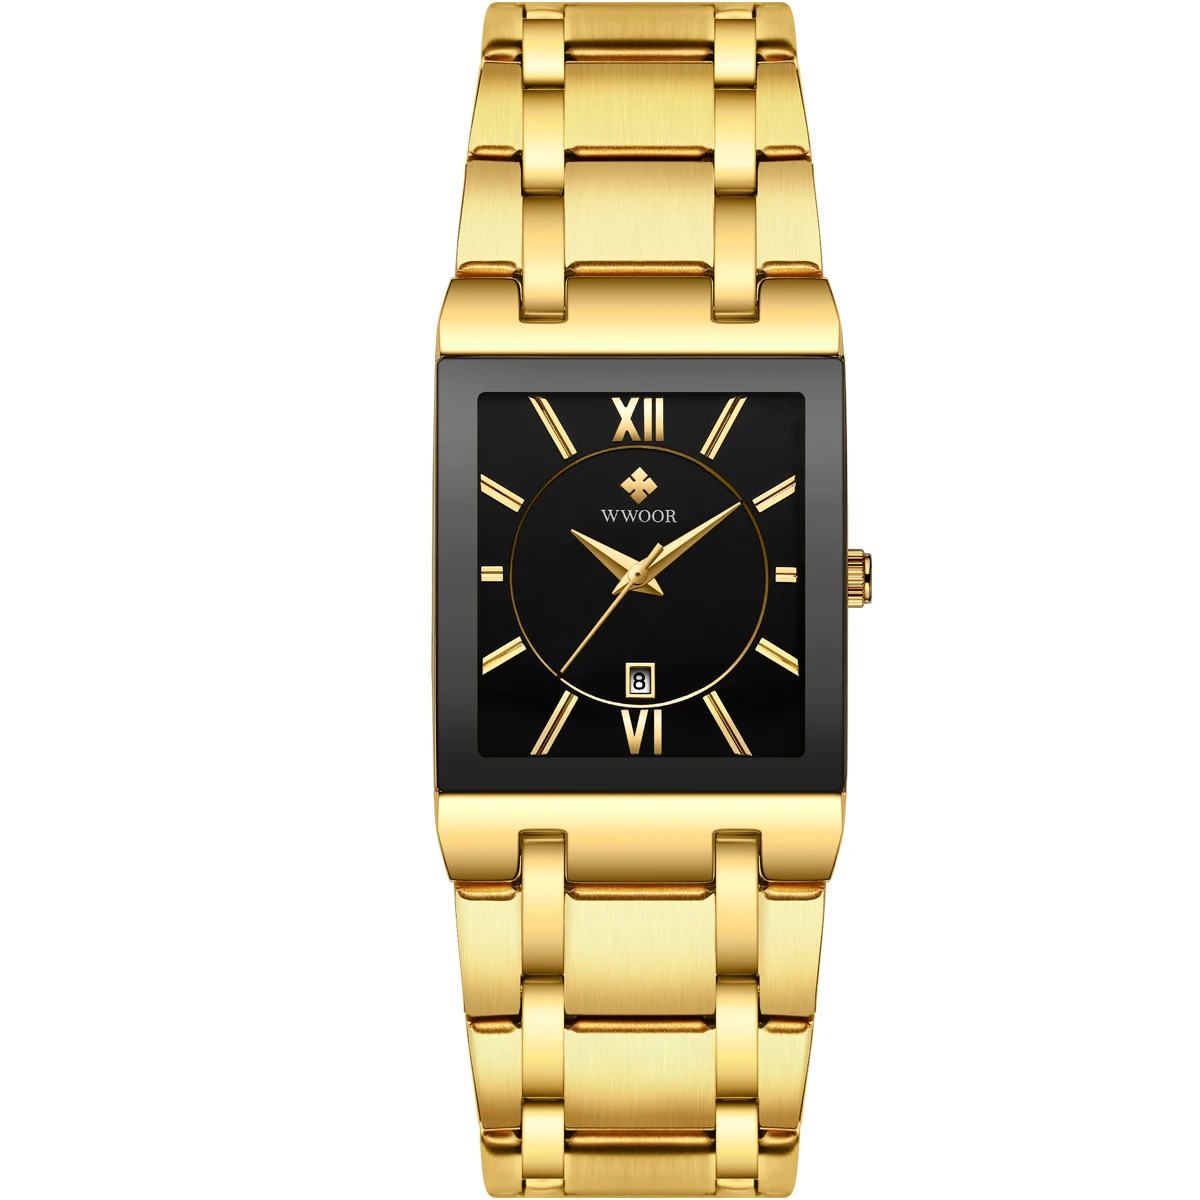 WWOOR WR-8858M Men's Gold Stainless Steel Analog Dial Quartz Wrist Watch  AEW126 | eBay